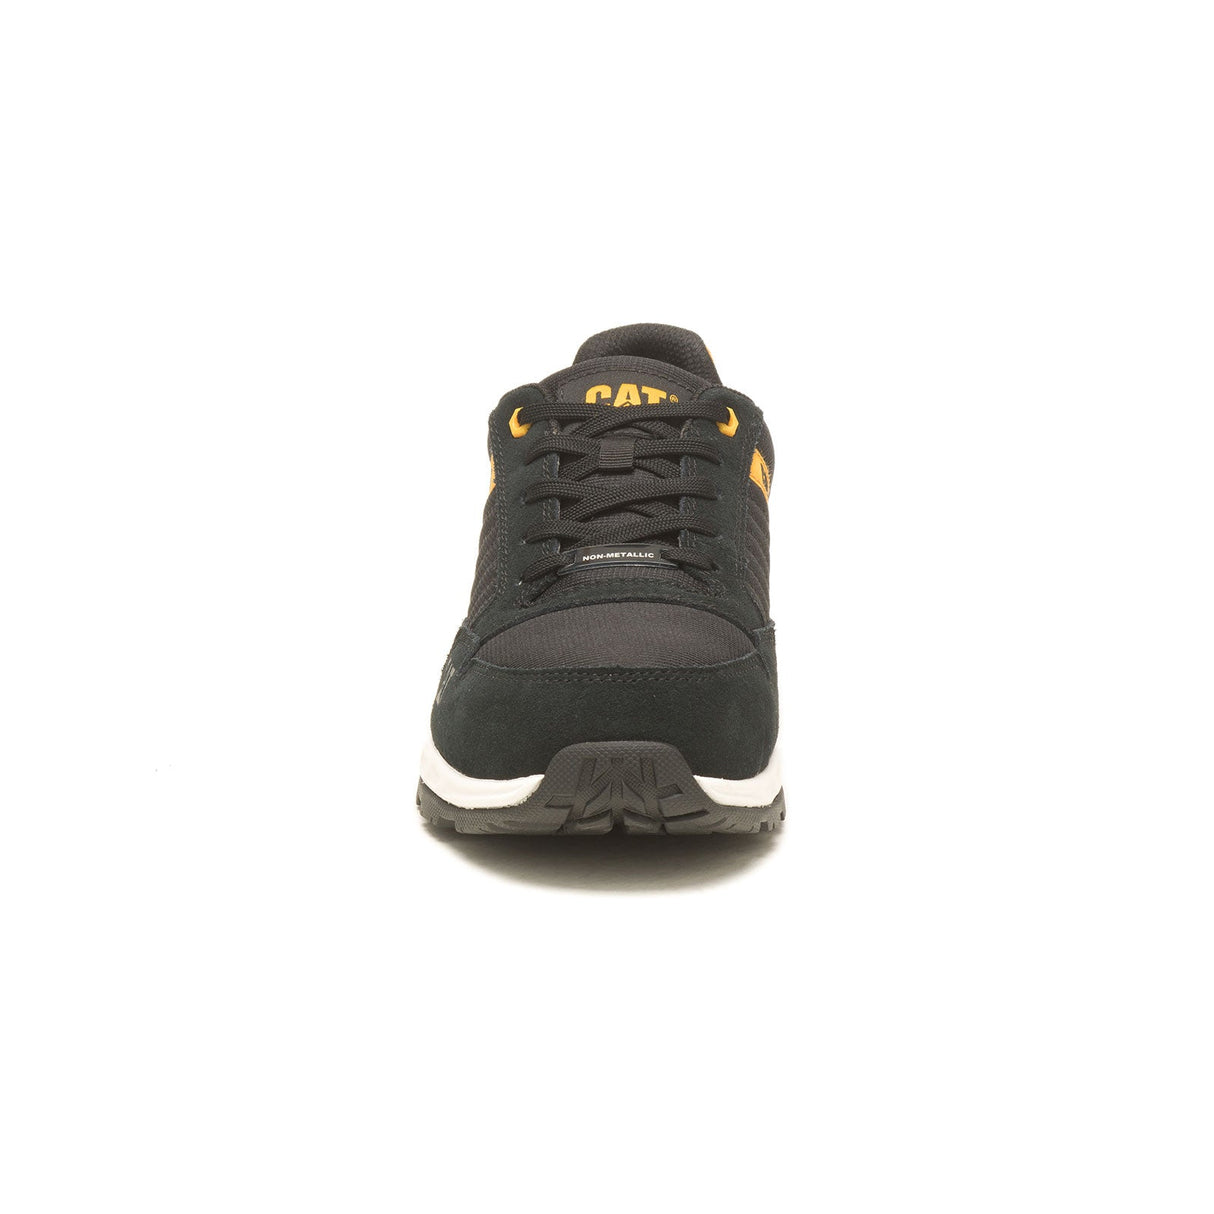 Caterpillar Venward Men's Composite-Toe Work Shoes P91480-3